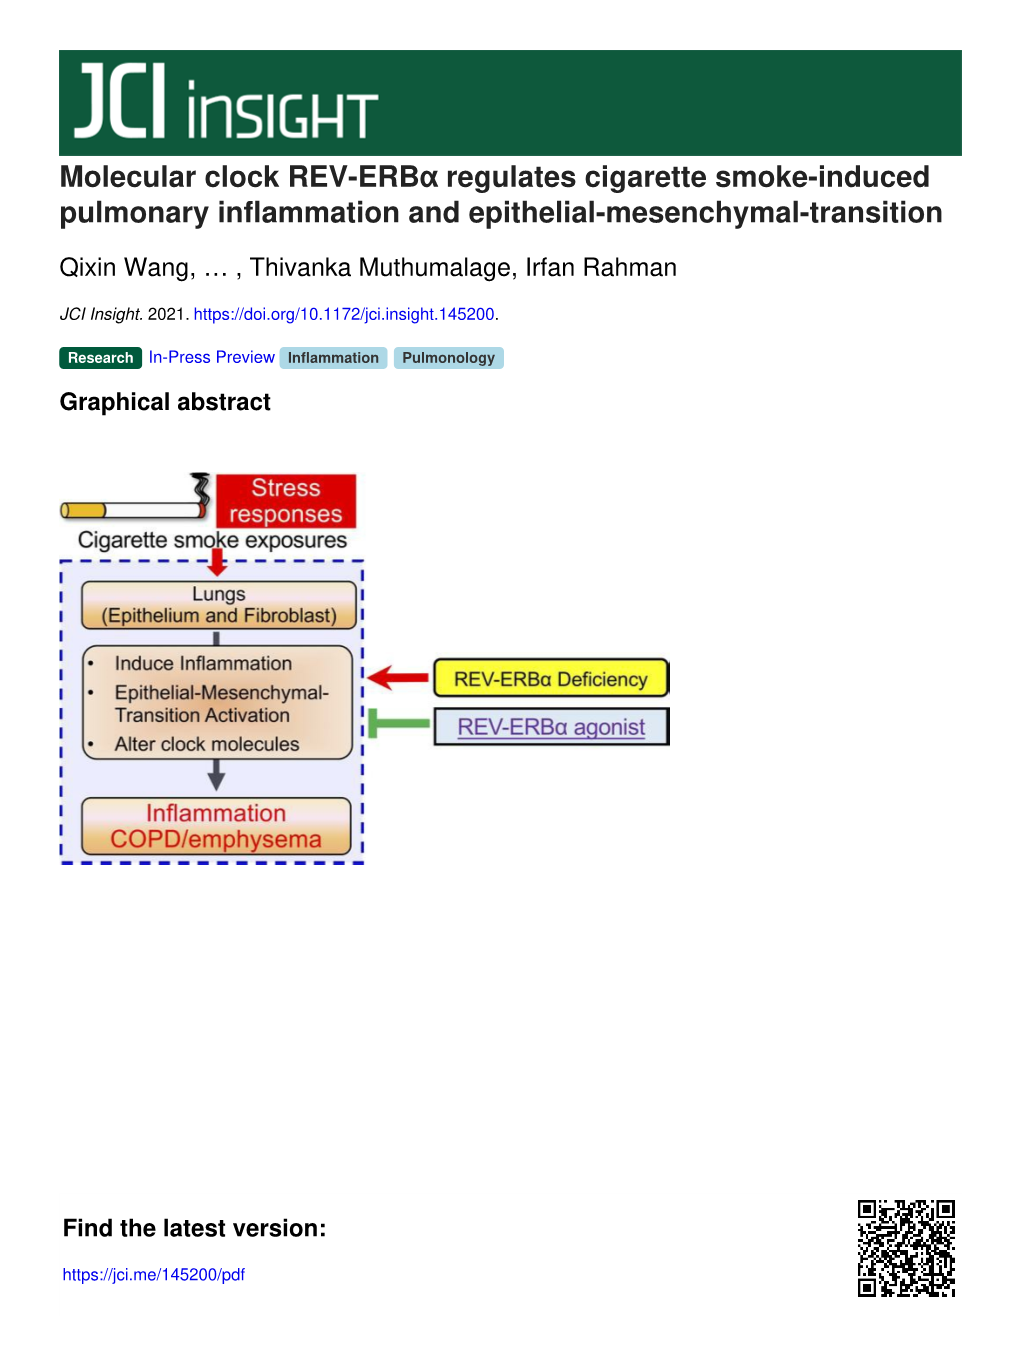 Molecular Clock REV-Erbα Regulates Cigarette Smoke-Induced Pulmonary Inflammation and Epithelial-Mesenchymal-Transition